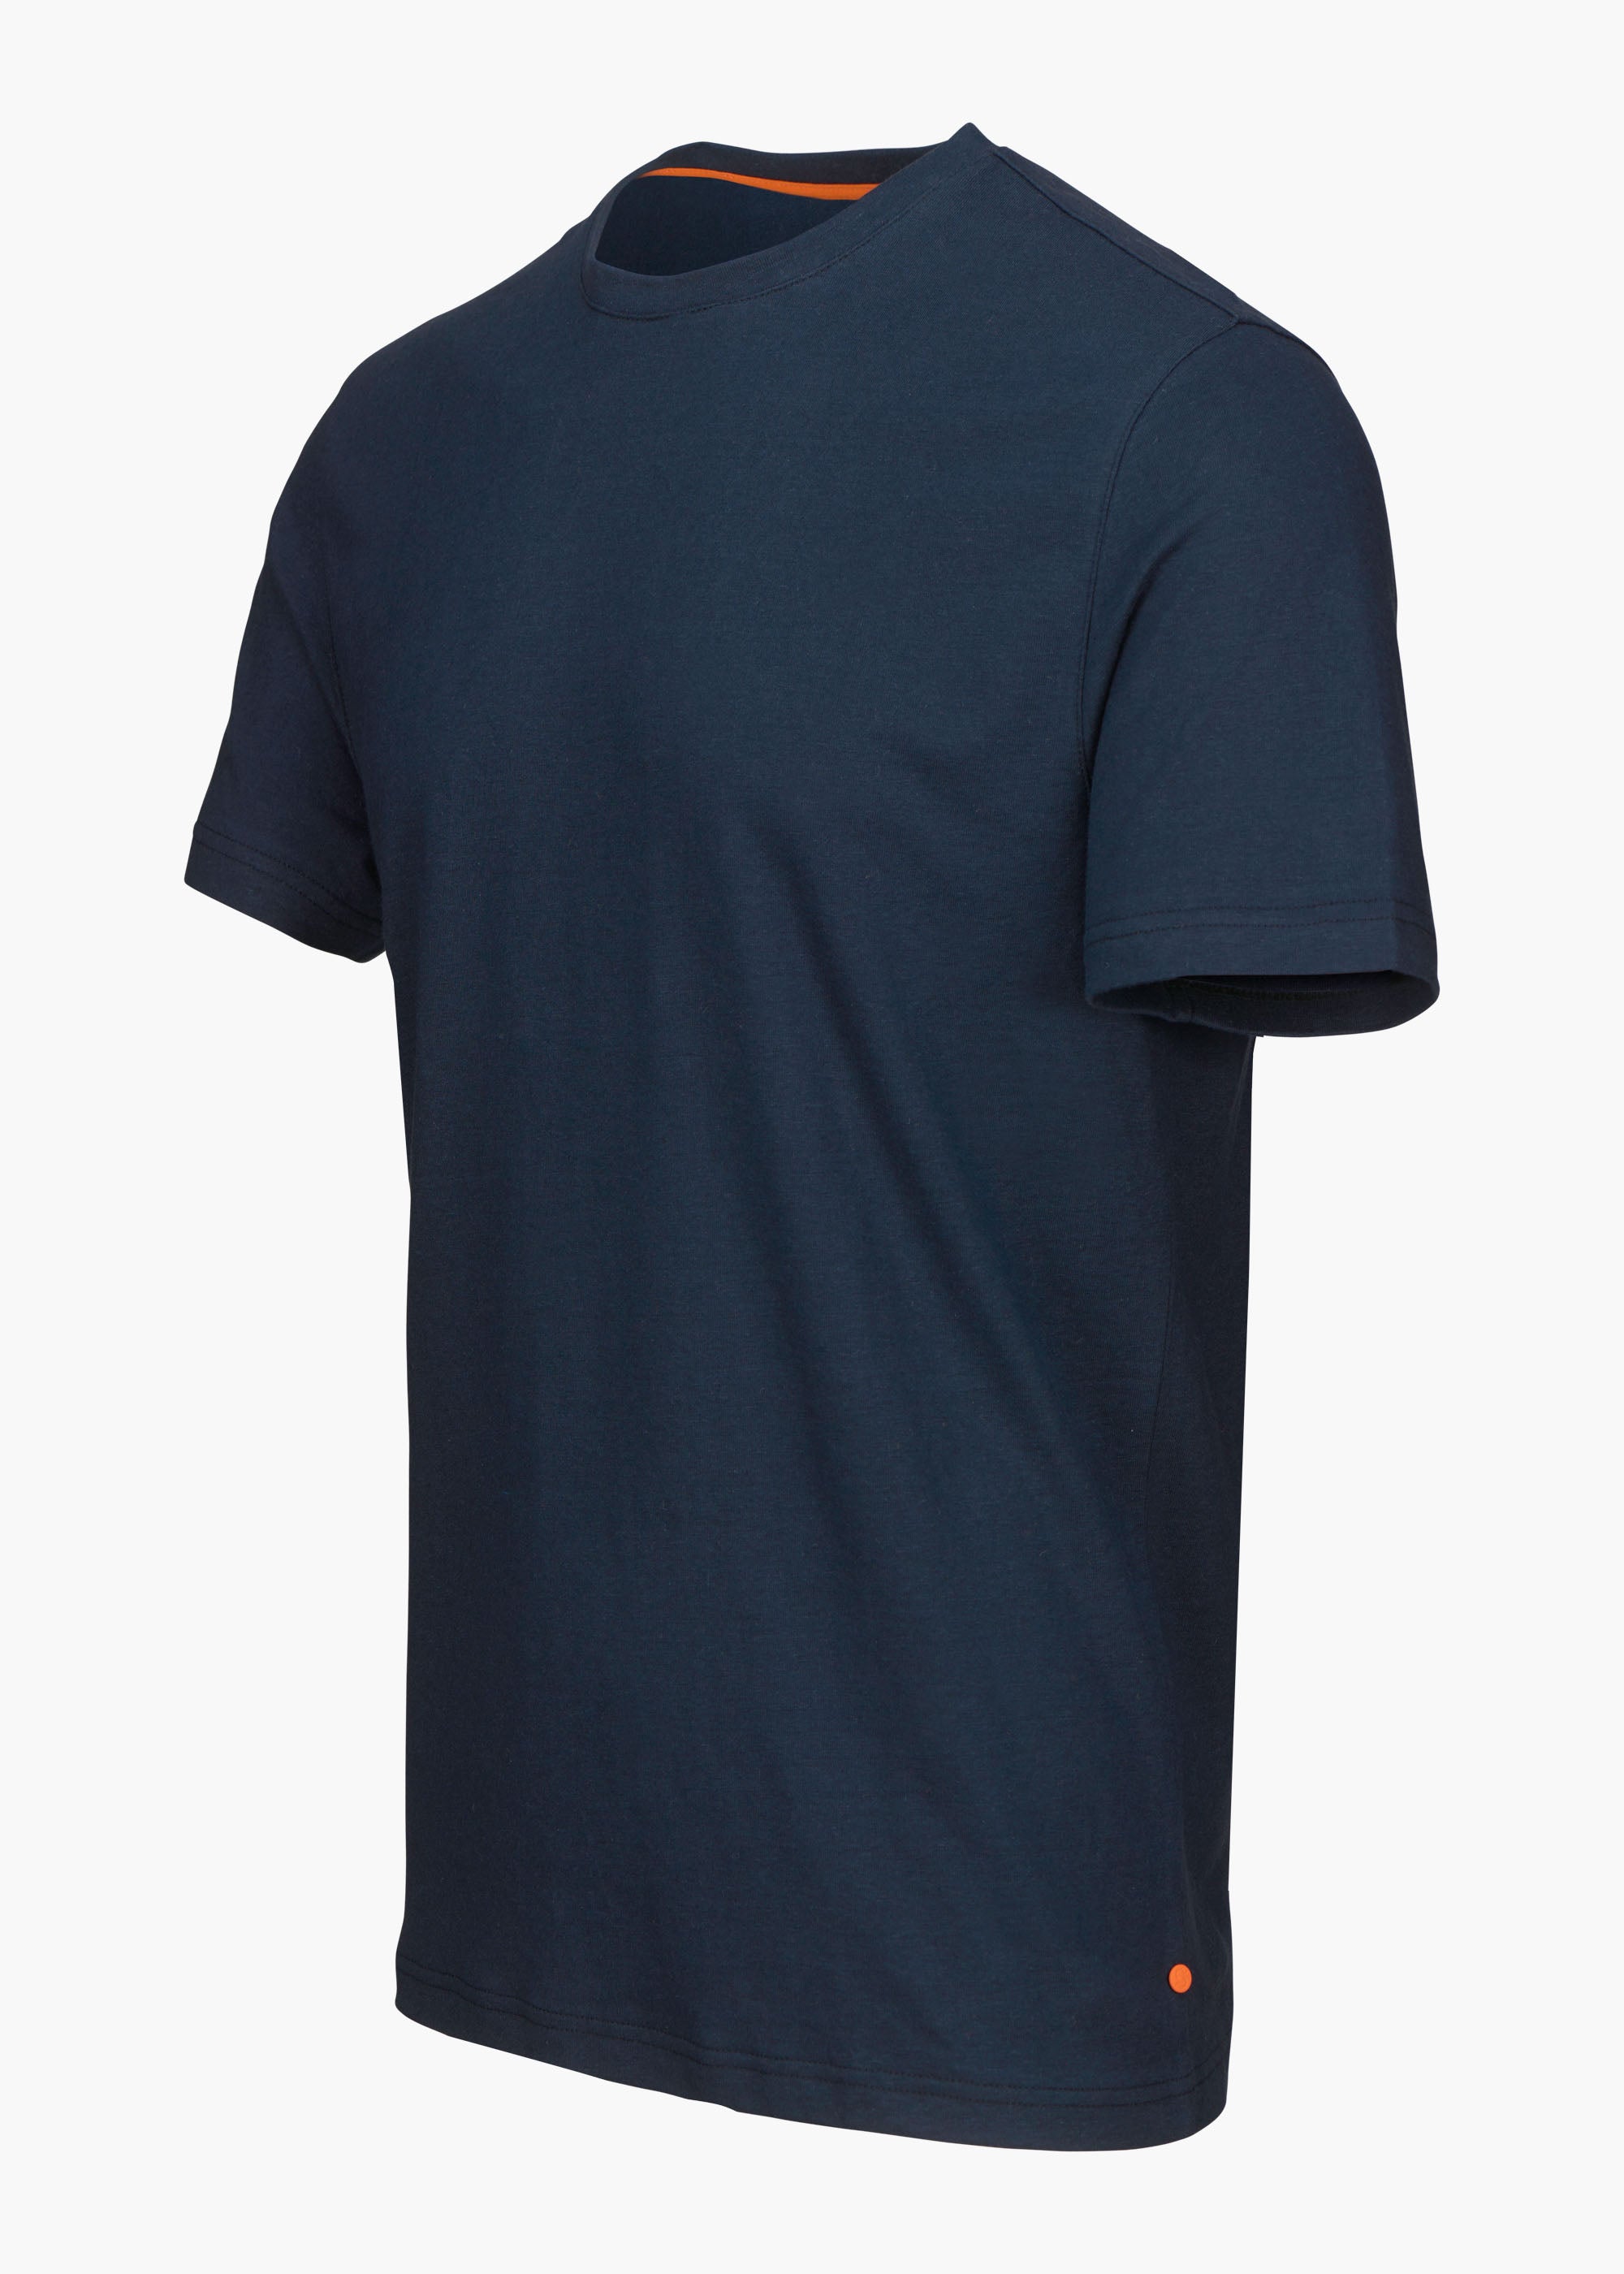 Lino T Shirt - background::white,variant::Navy